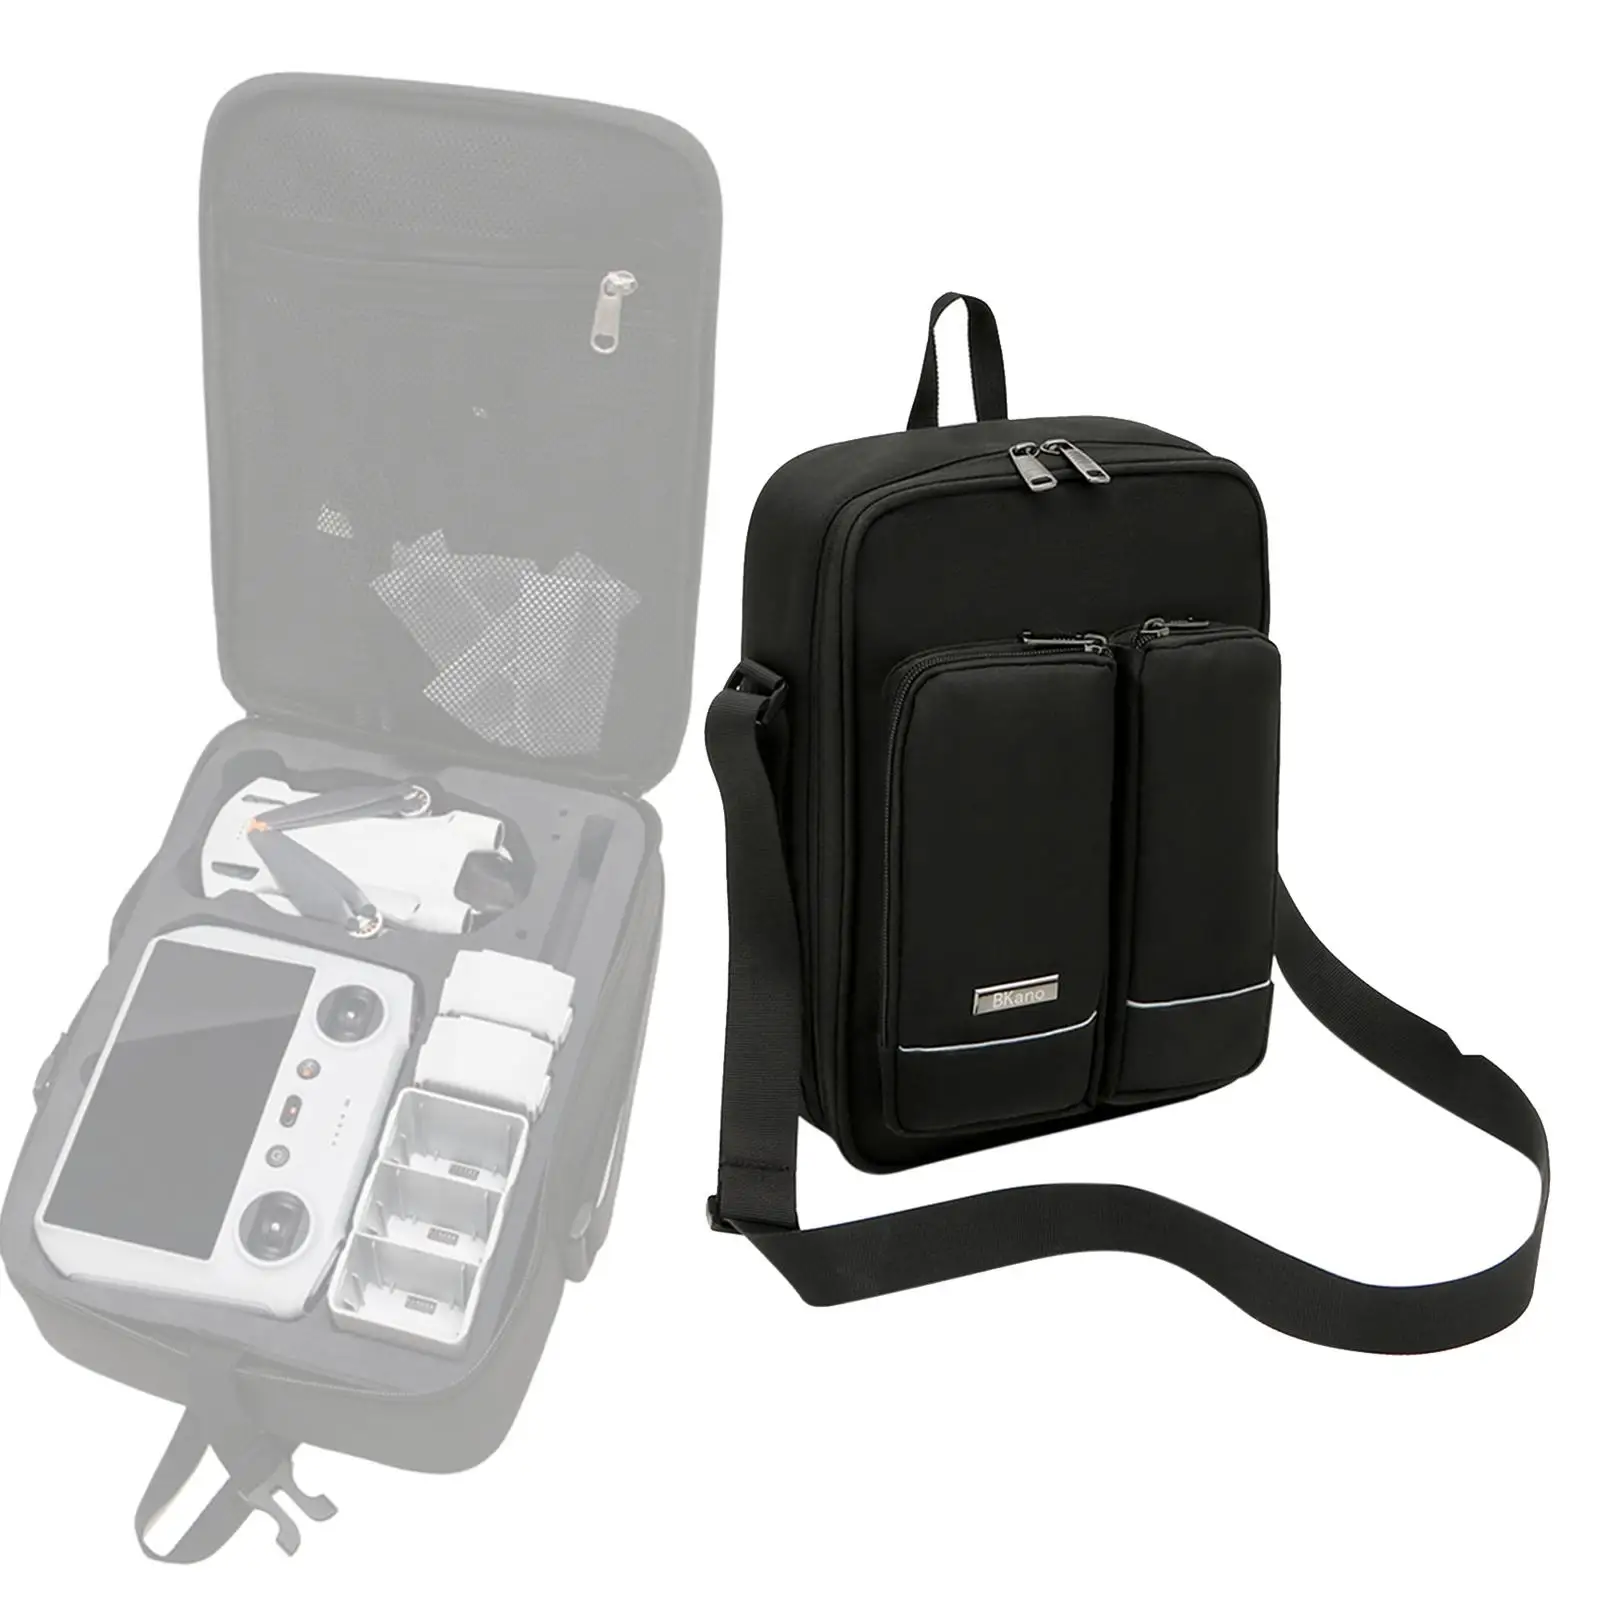 Portable Carrying Case Shoulder Bag with Shoulder Strap Protective Storage Handbag for DJI Mini 3 Pro Quadcopter Accessories